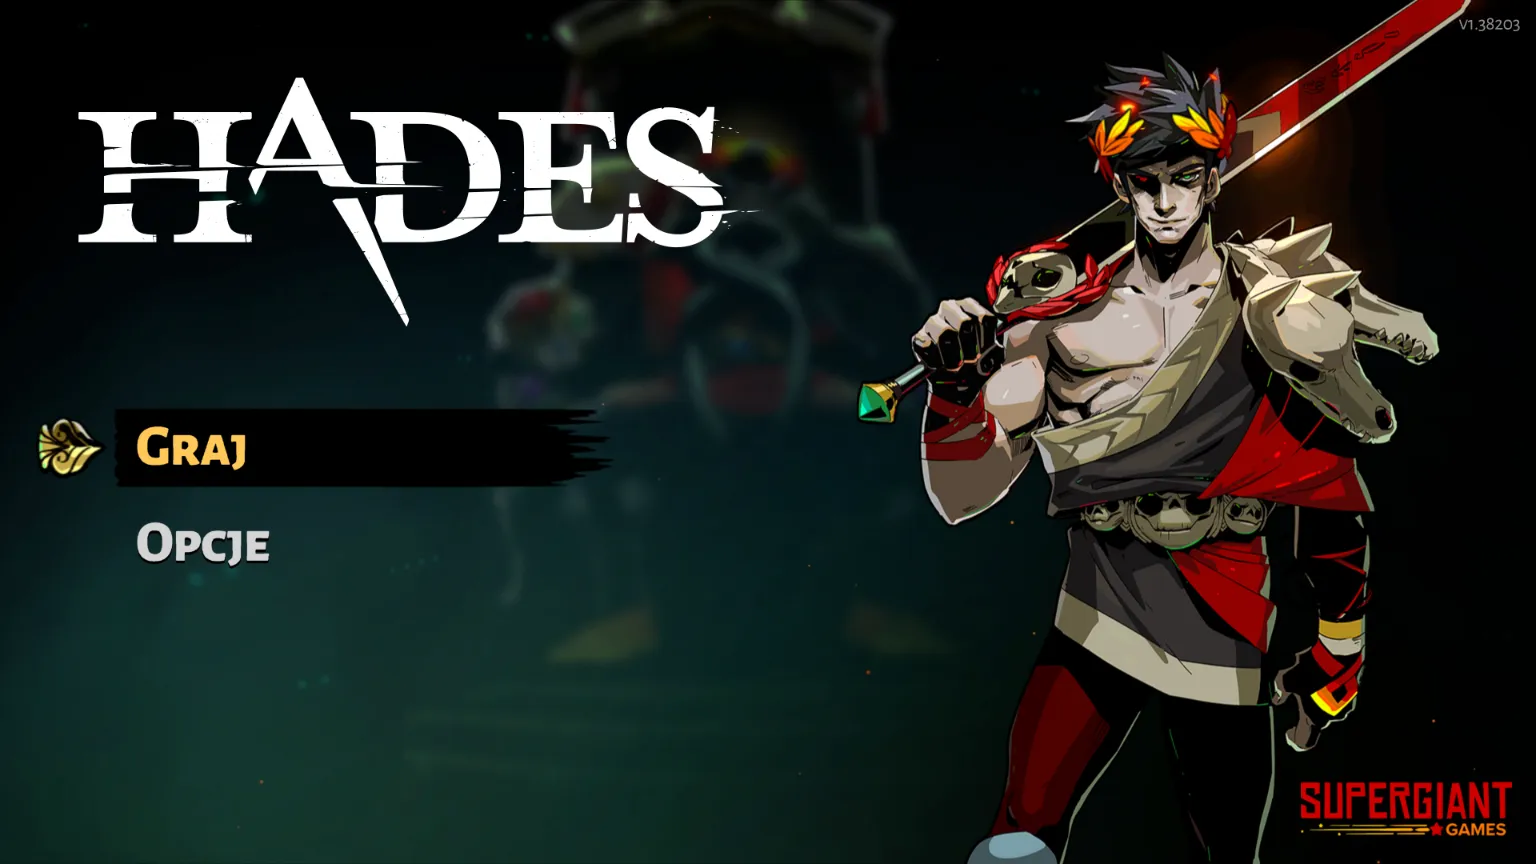 Ekran startowy gry Hades.